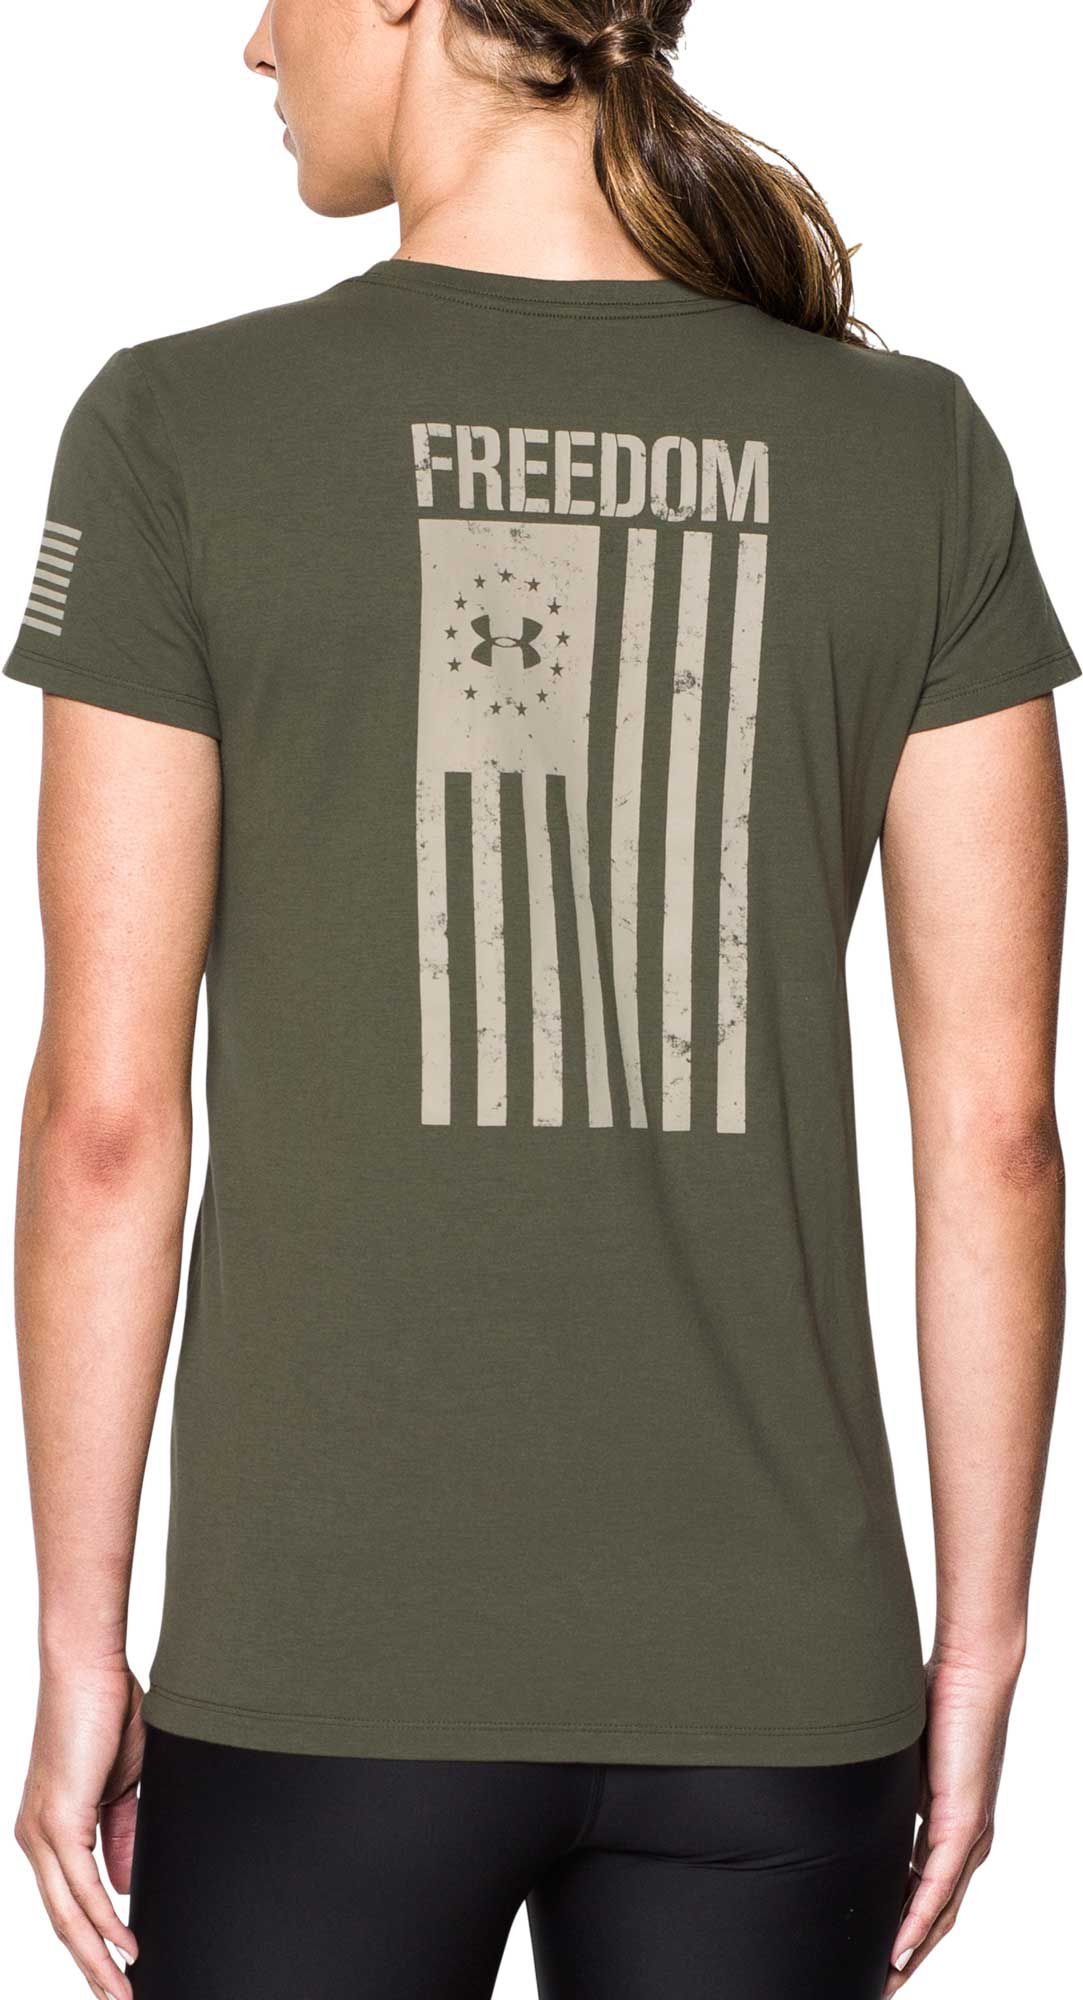 under armour women's freedom shirt